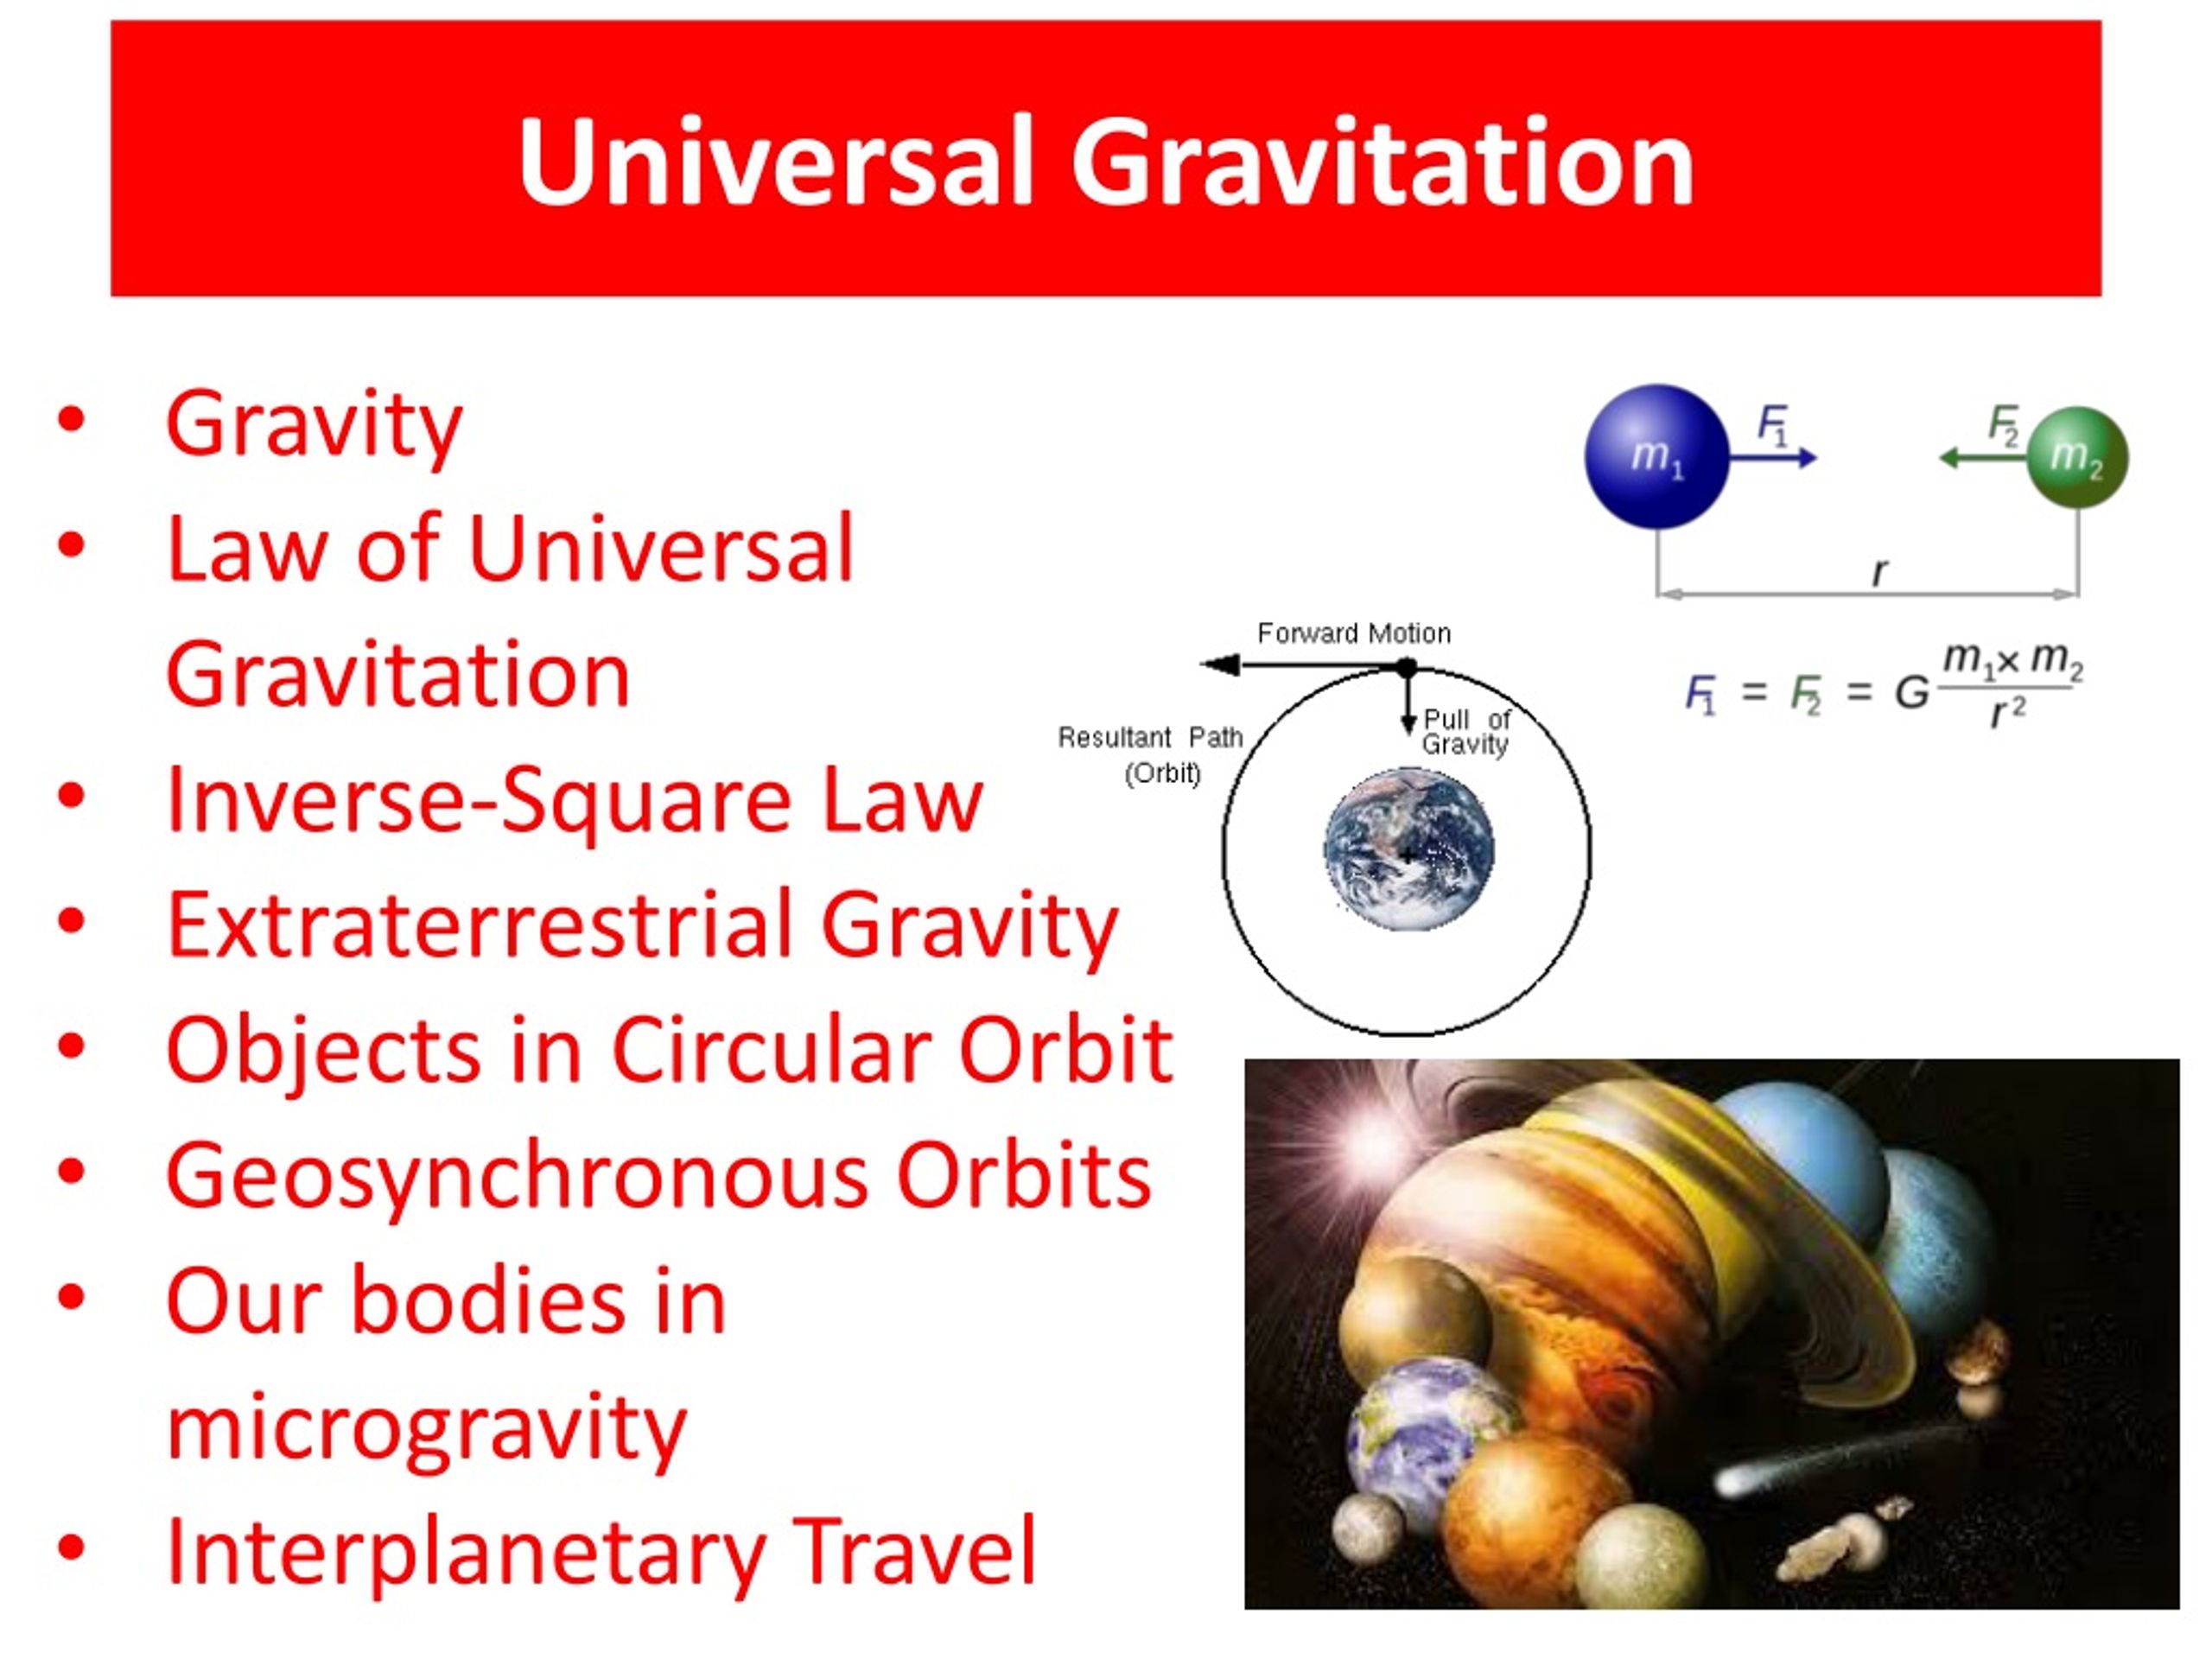 Ppt Universal Gravitation Powerpoint Presentation Free Download Id657284 2131